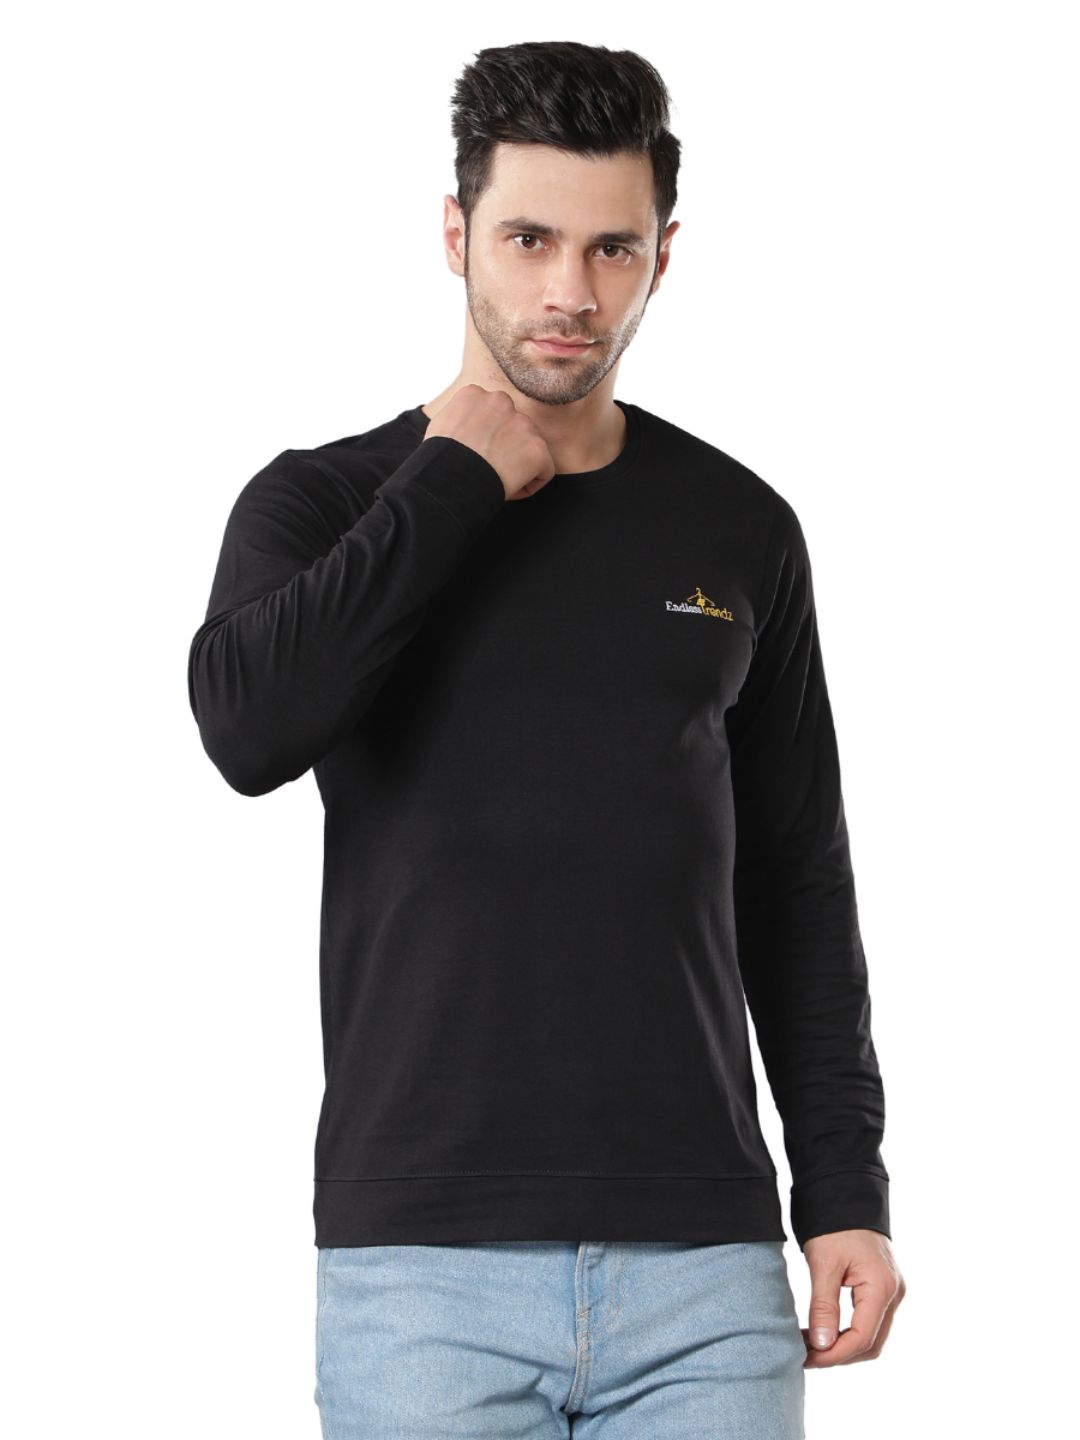 EndlessTrendz Cotton-Rich Ultra-Soft T-Shirt in Classic Black